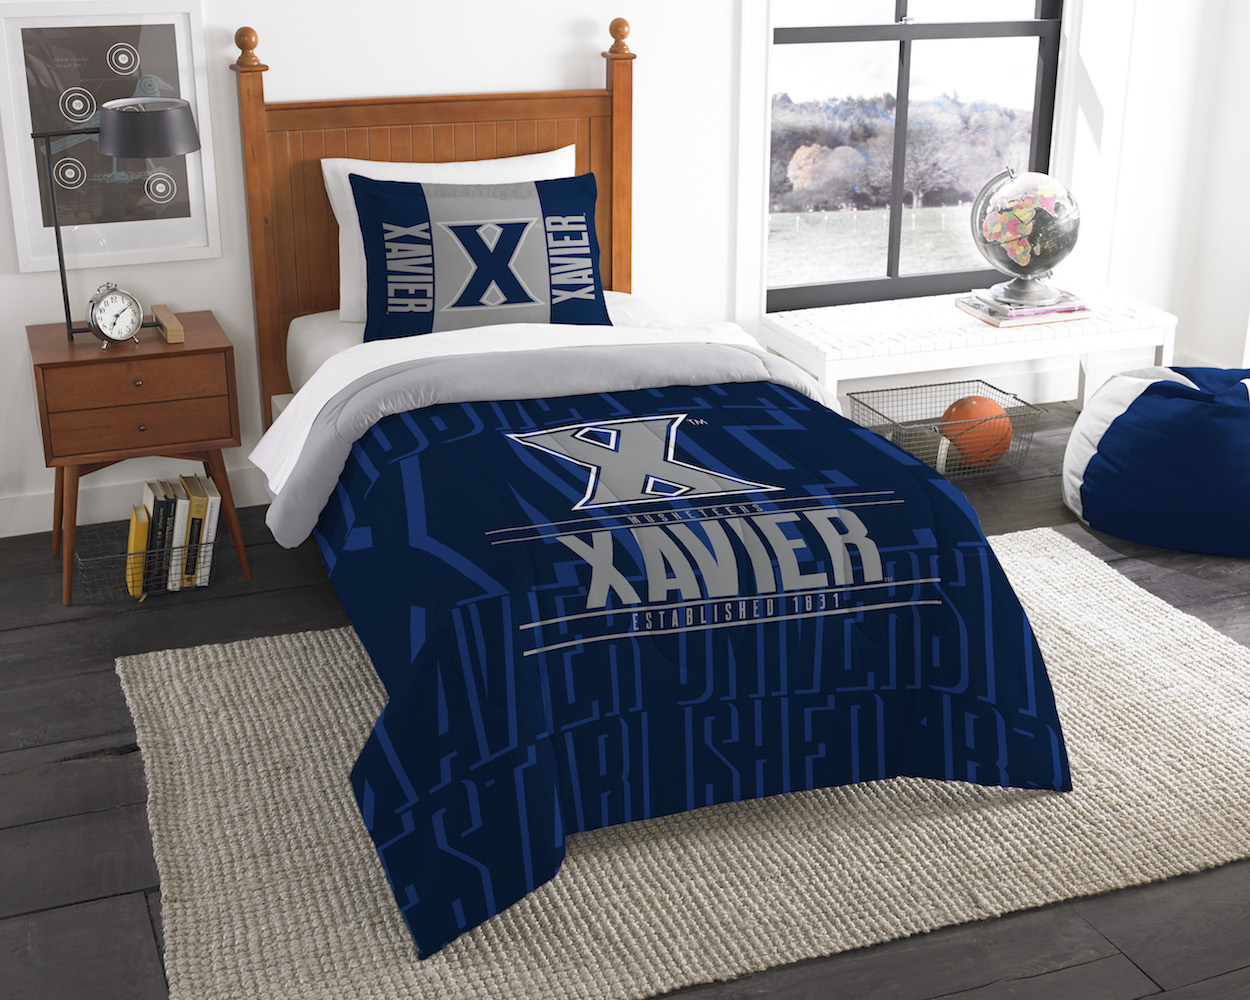 Xavier Musketeers Twin Comforter Set with Sham